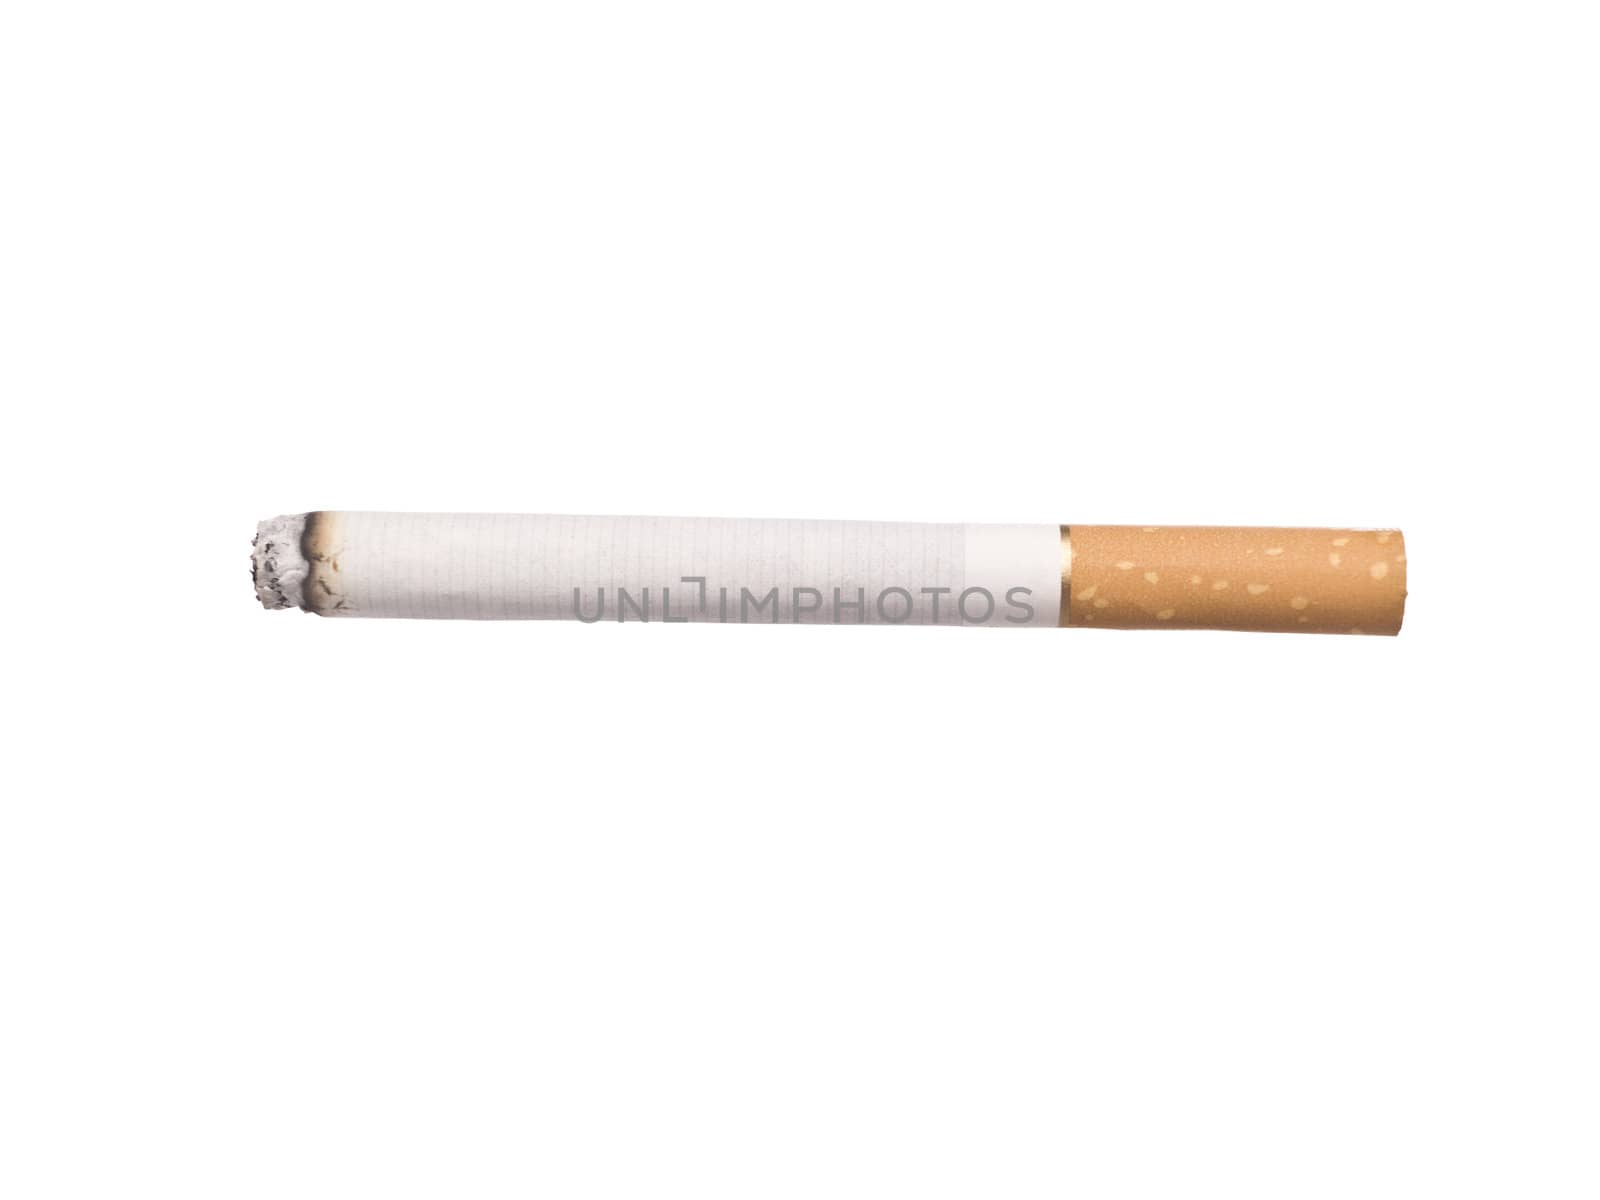 Lit cigarette by gemenacom